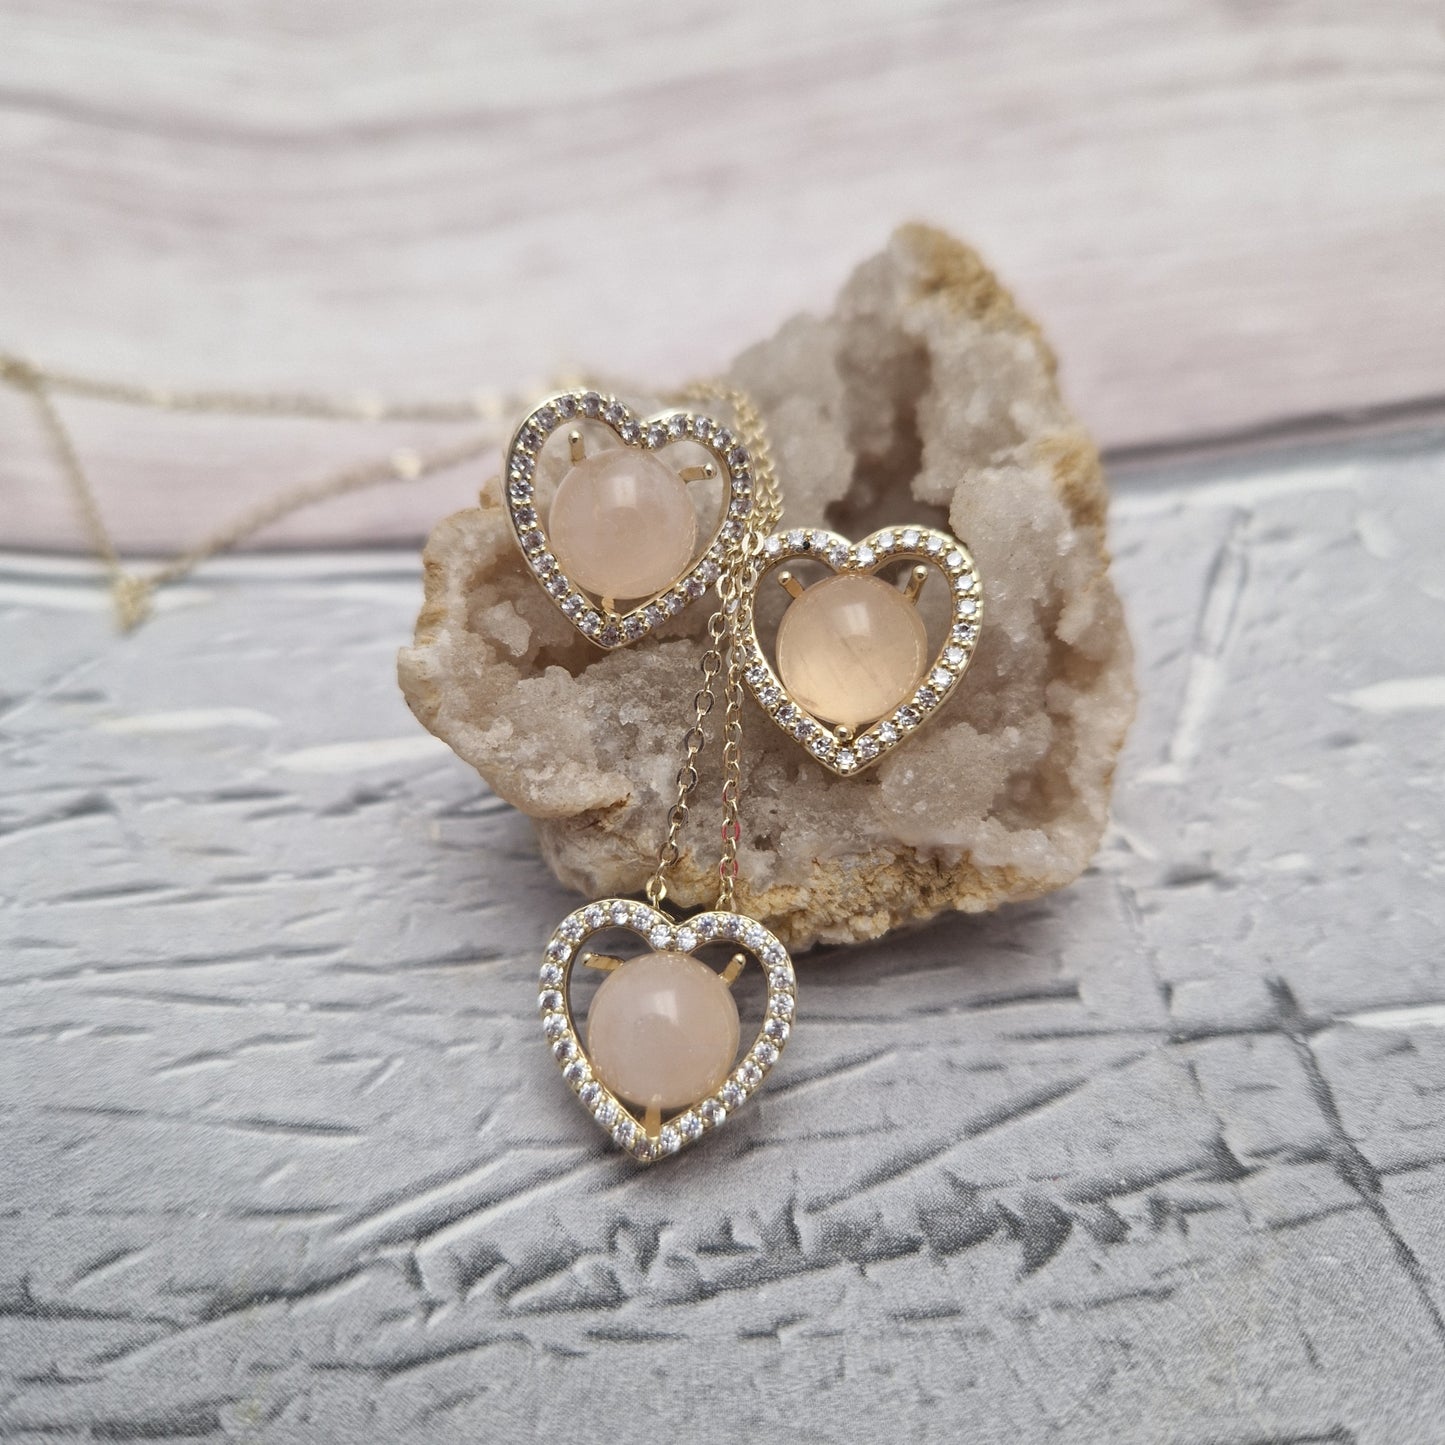 Rose quartz set in a love heart pendant and earrings on gold colouredmounts.